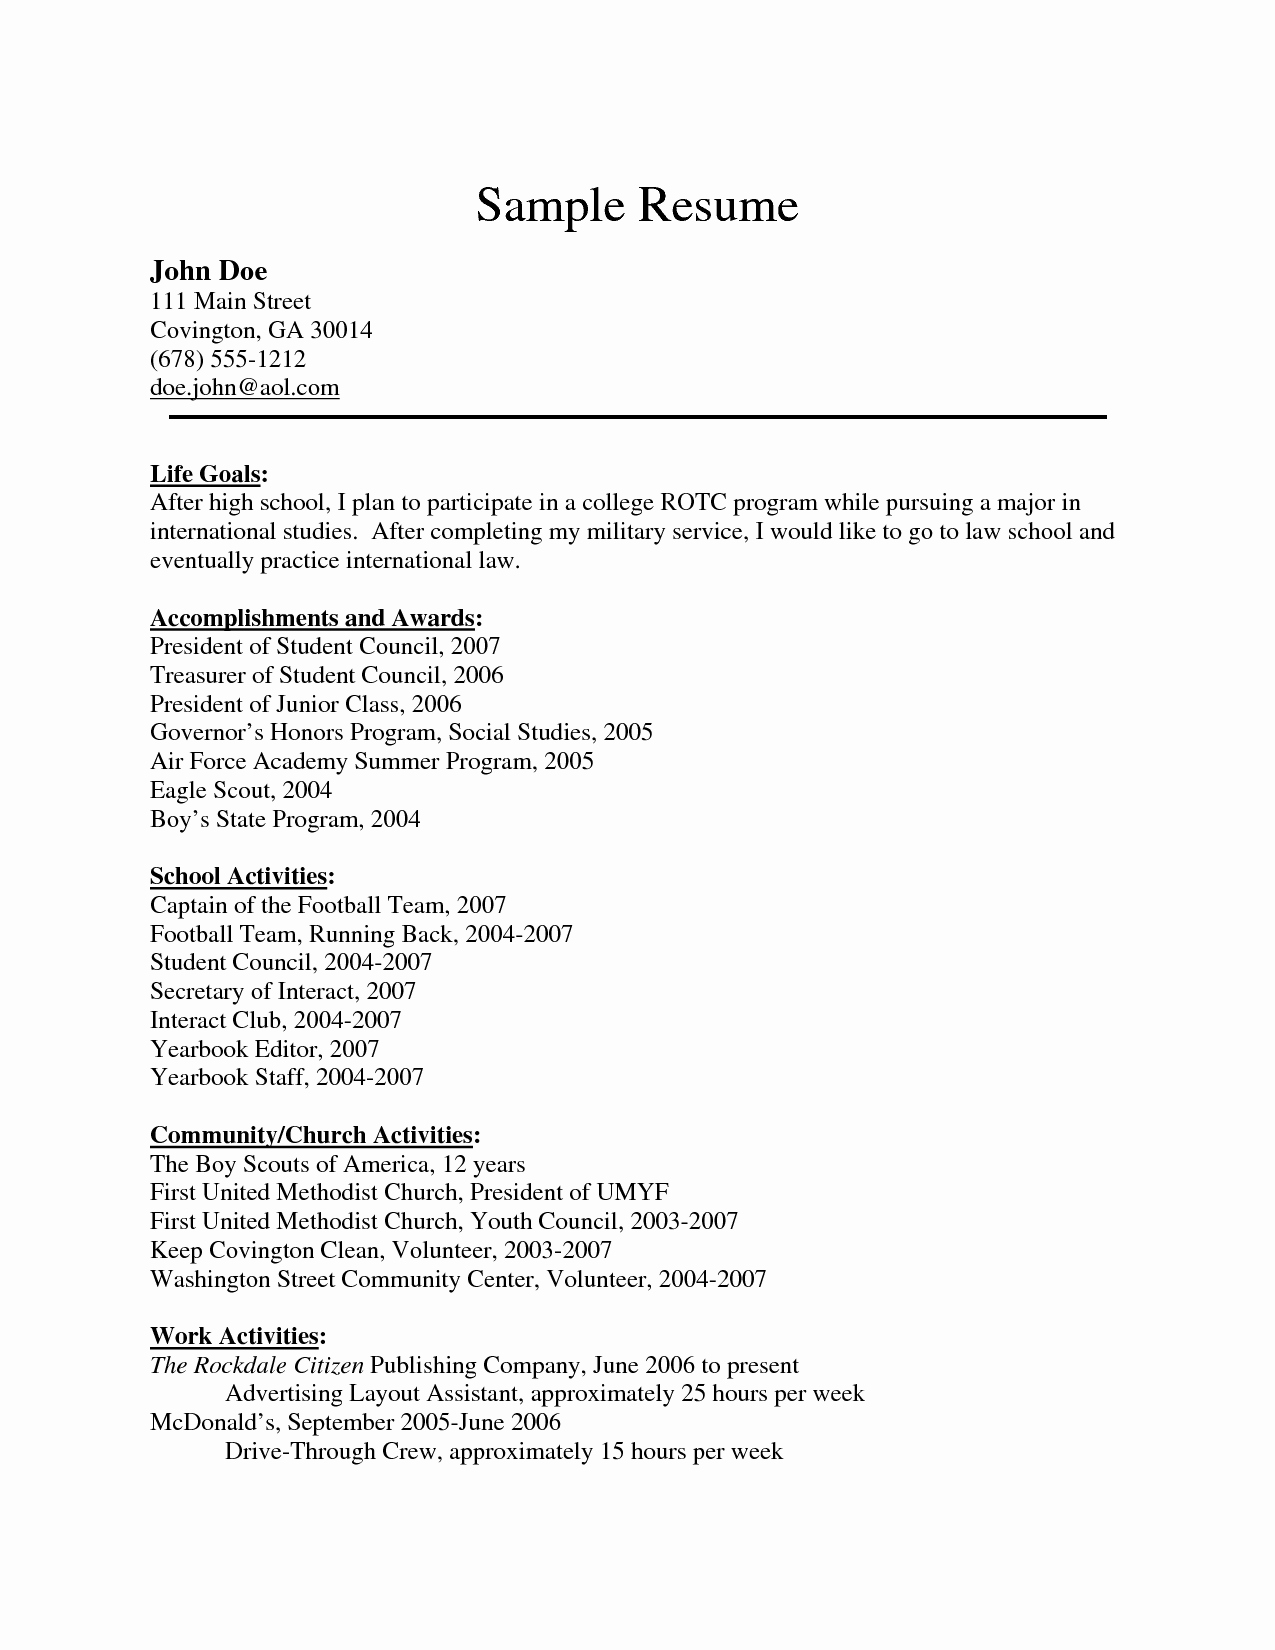 Mcdonalds Job Description Resume Fresh Mcdonalds Resume Sample Resume Ideas